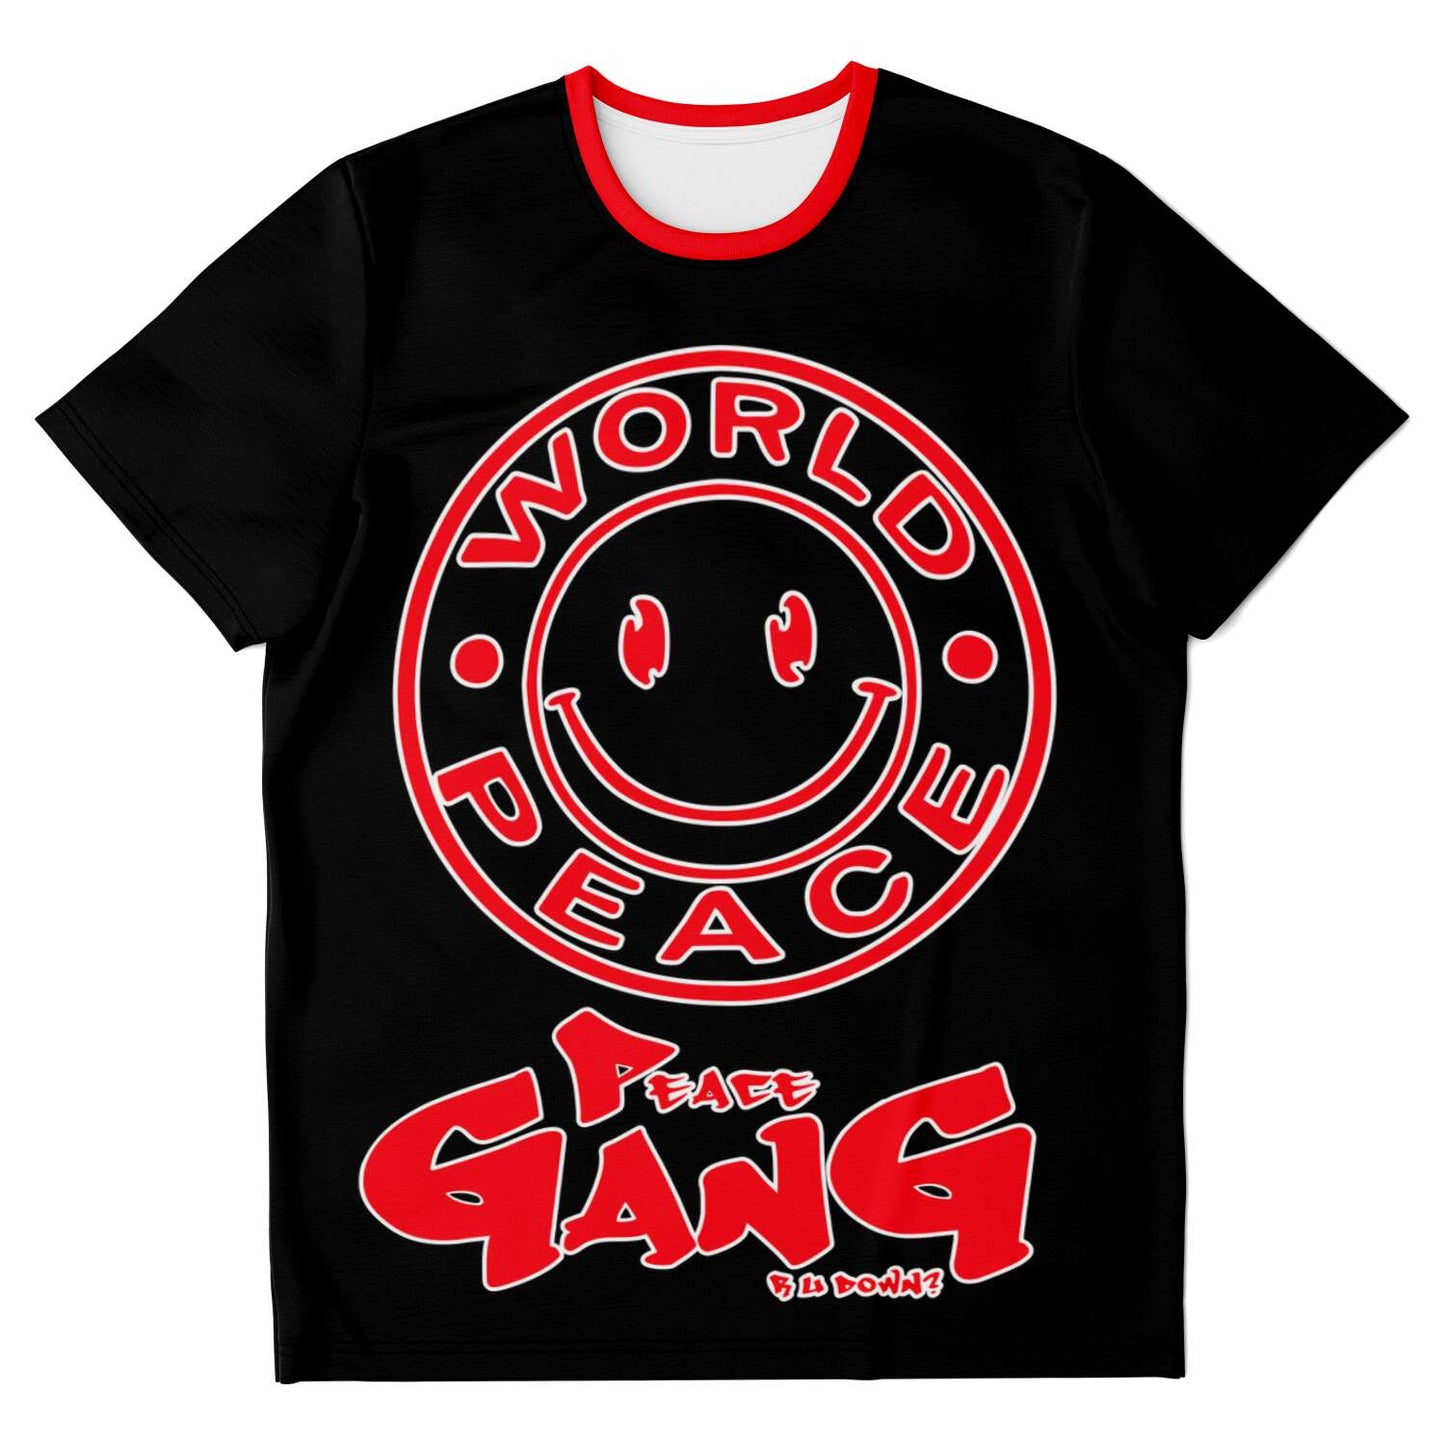 t shirt " WORLD PEACE "